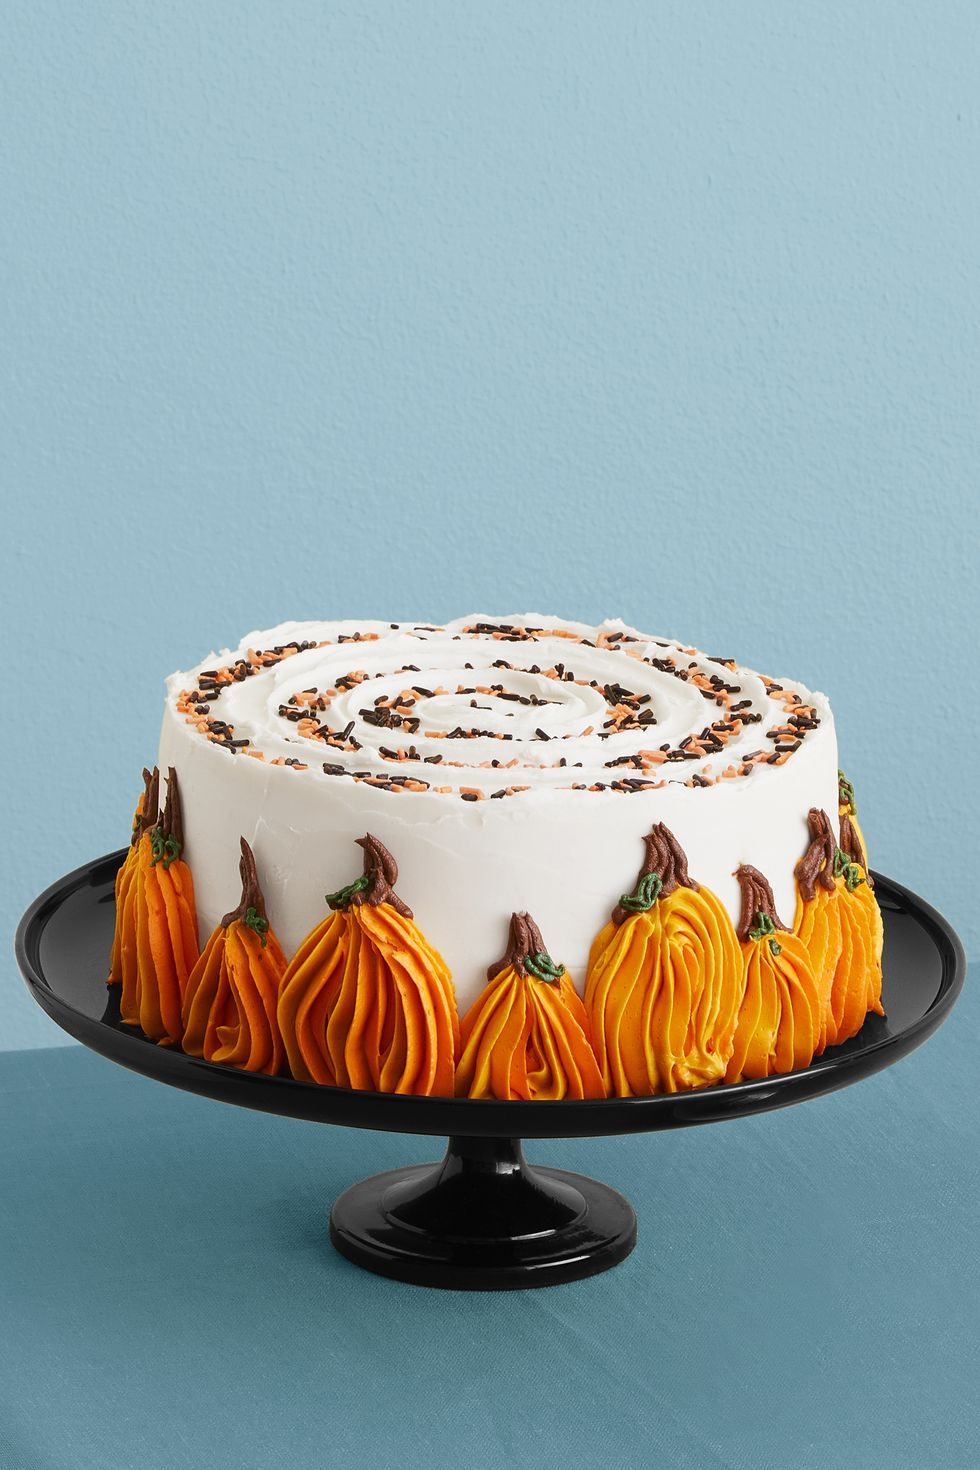 35+ Easy Pumpkin Cake Recipes - How to Make the Best Pumpkin Cake